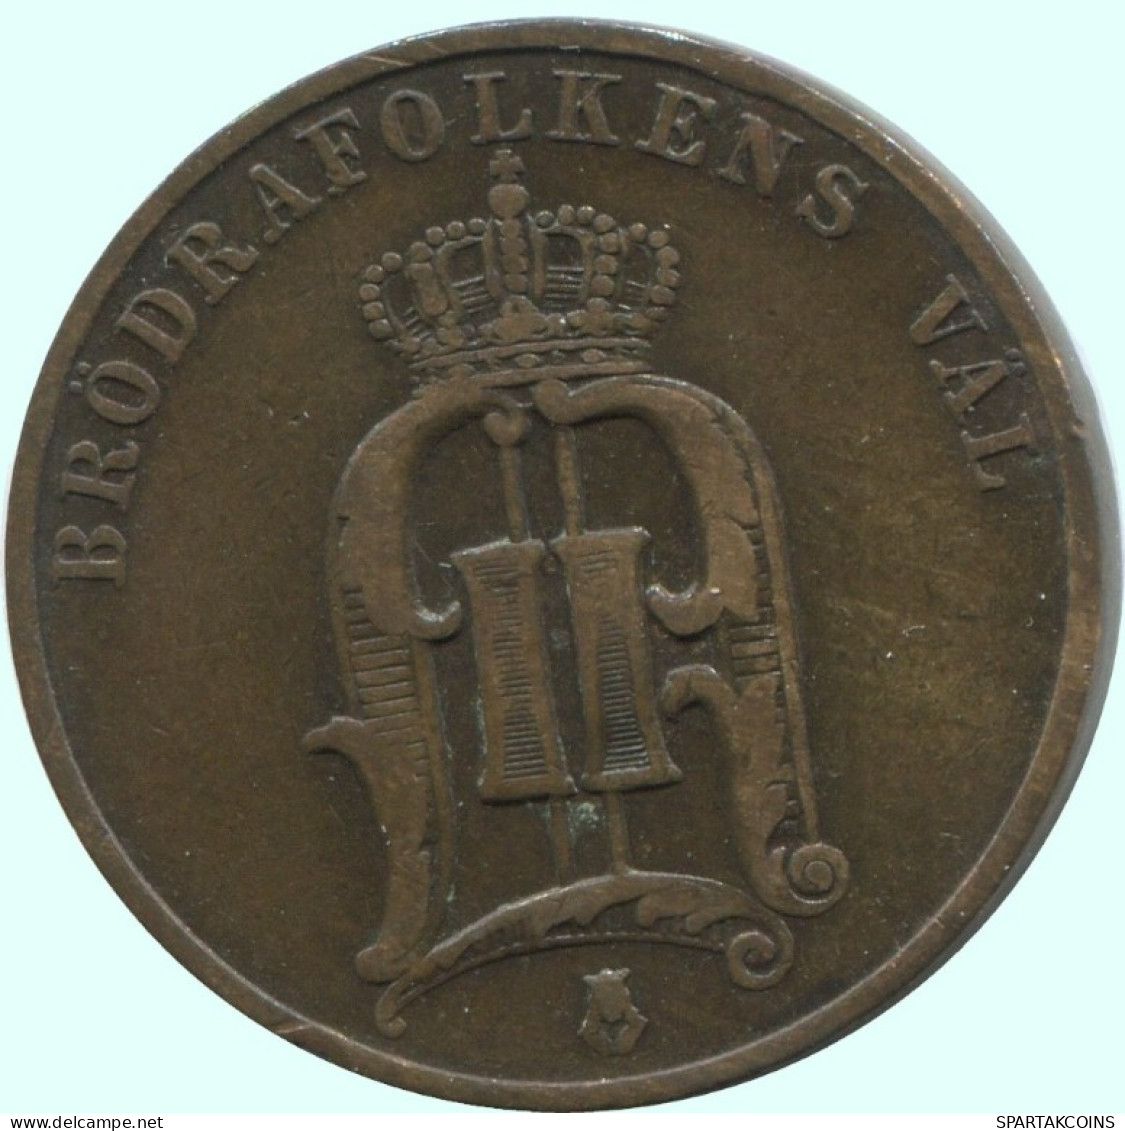 2 ORE 1888 SCHWEDEN SWEDEN Münze #AC909.2.D.A - Suède